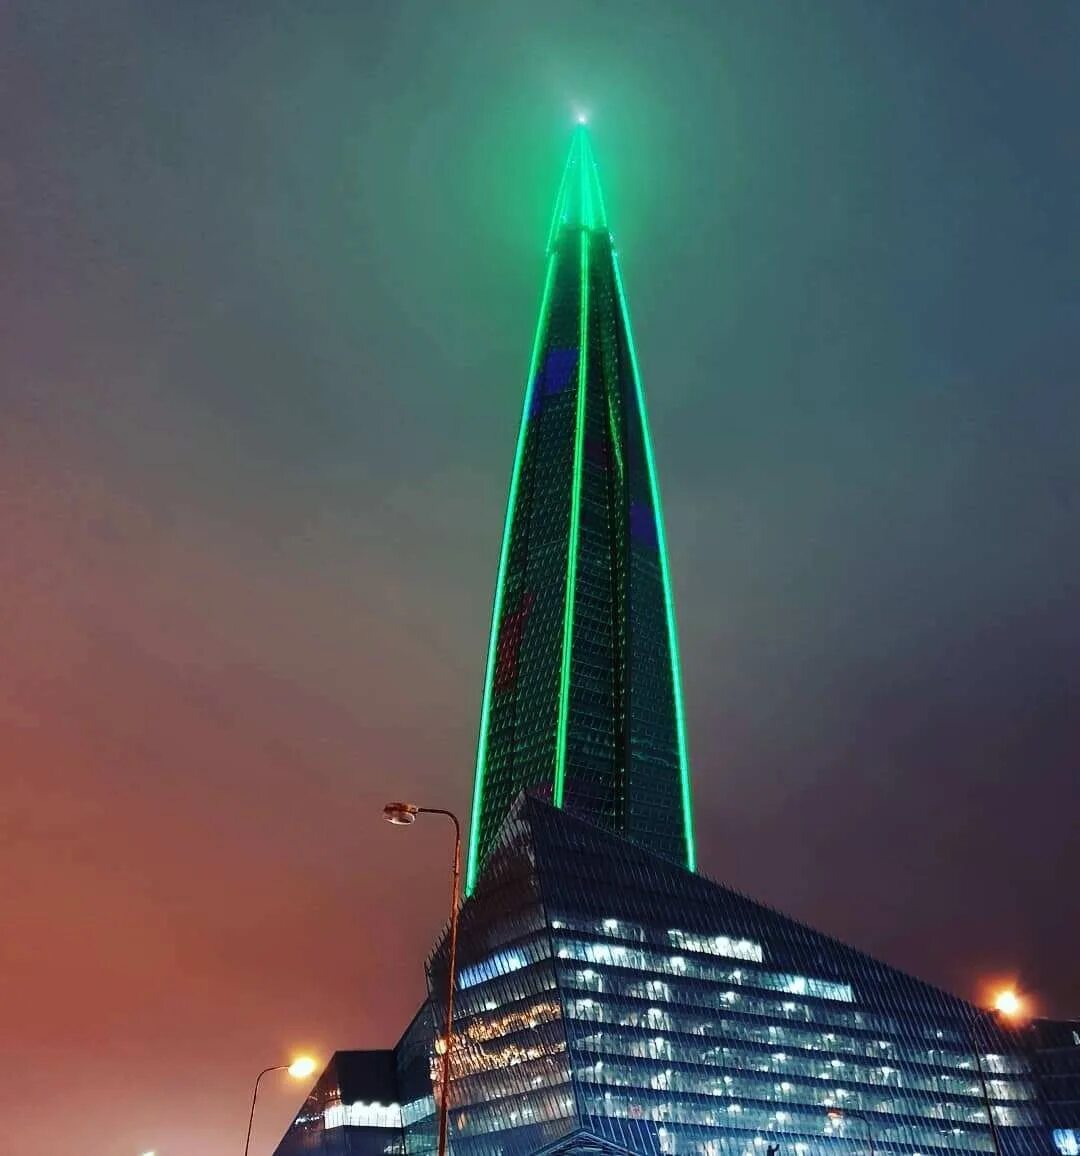 Светящееся здание. Лахта башня. Лахта центр зеленая подсветка. Лахта башня Саурона. Башня Лахта центр Санкт-Петербург ночью.